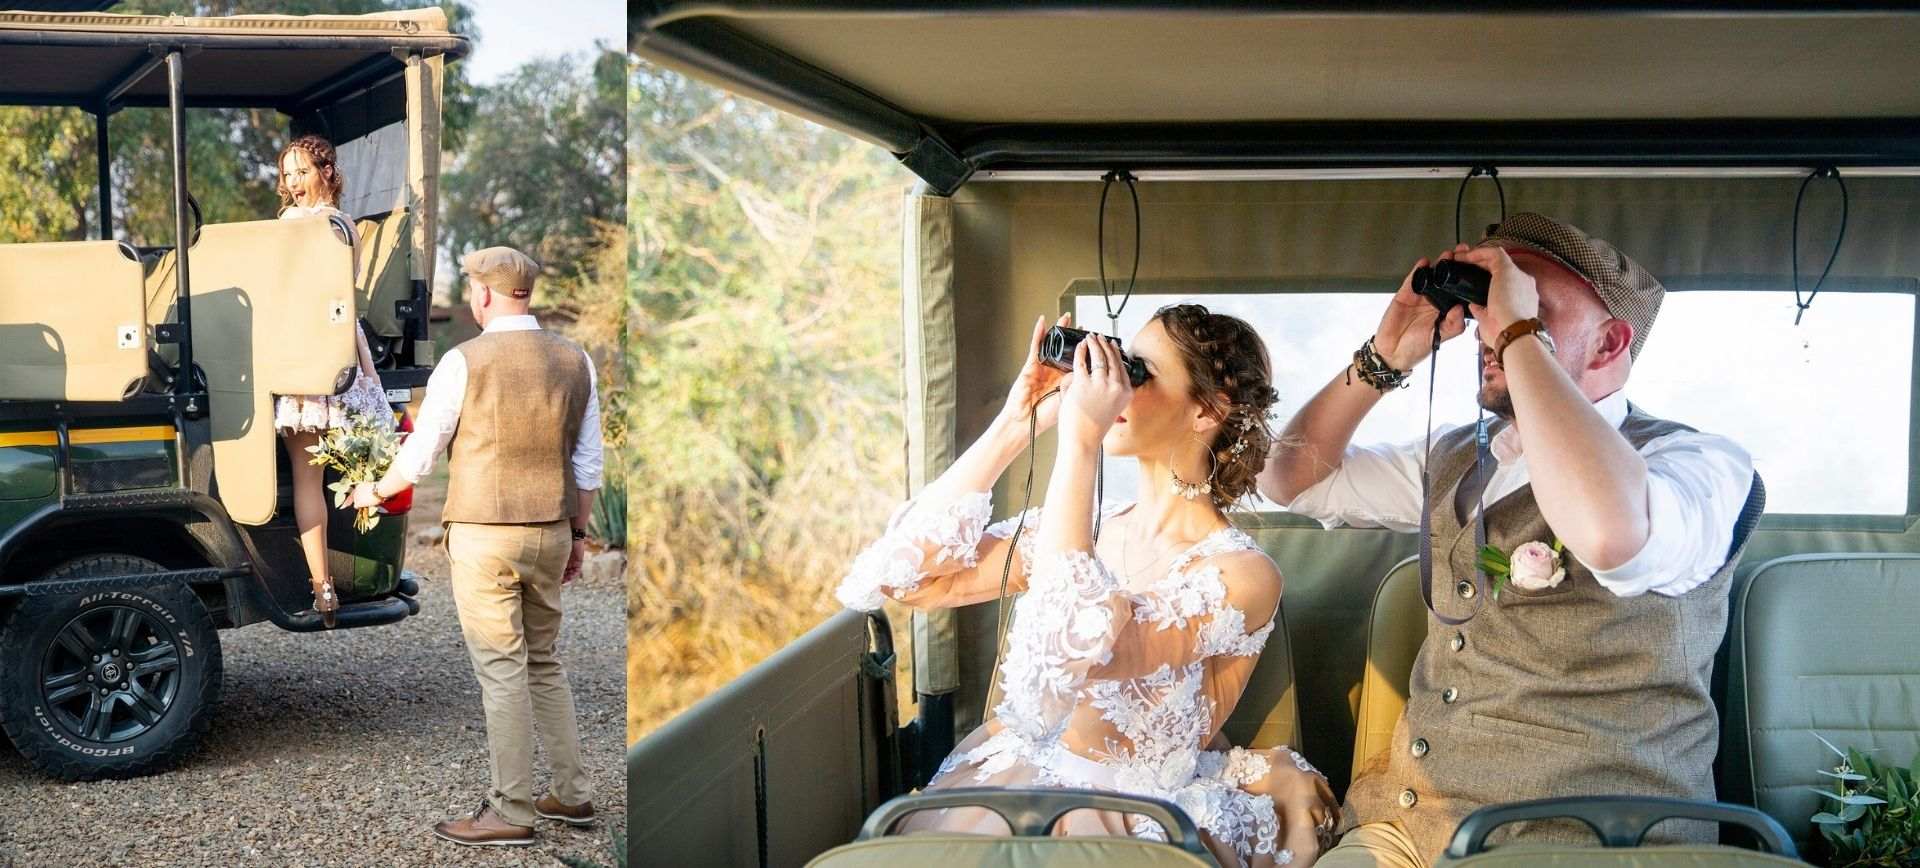 safari elopement wedding south africa - wedding couple in jeep during safari